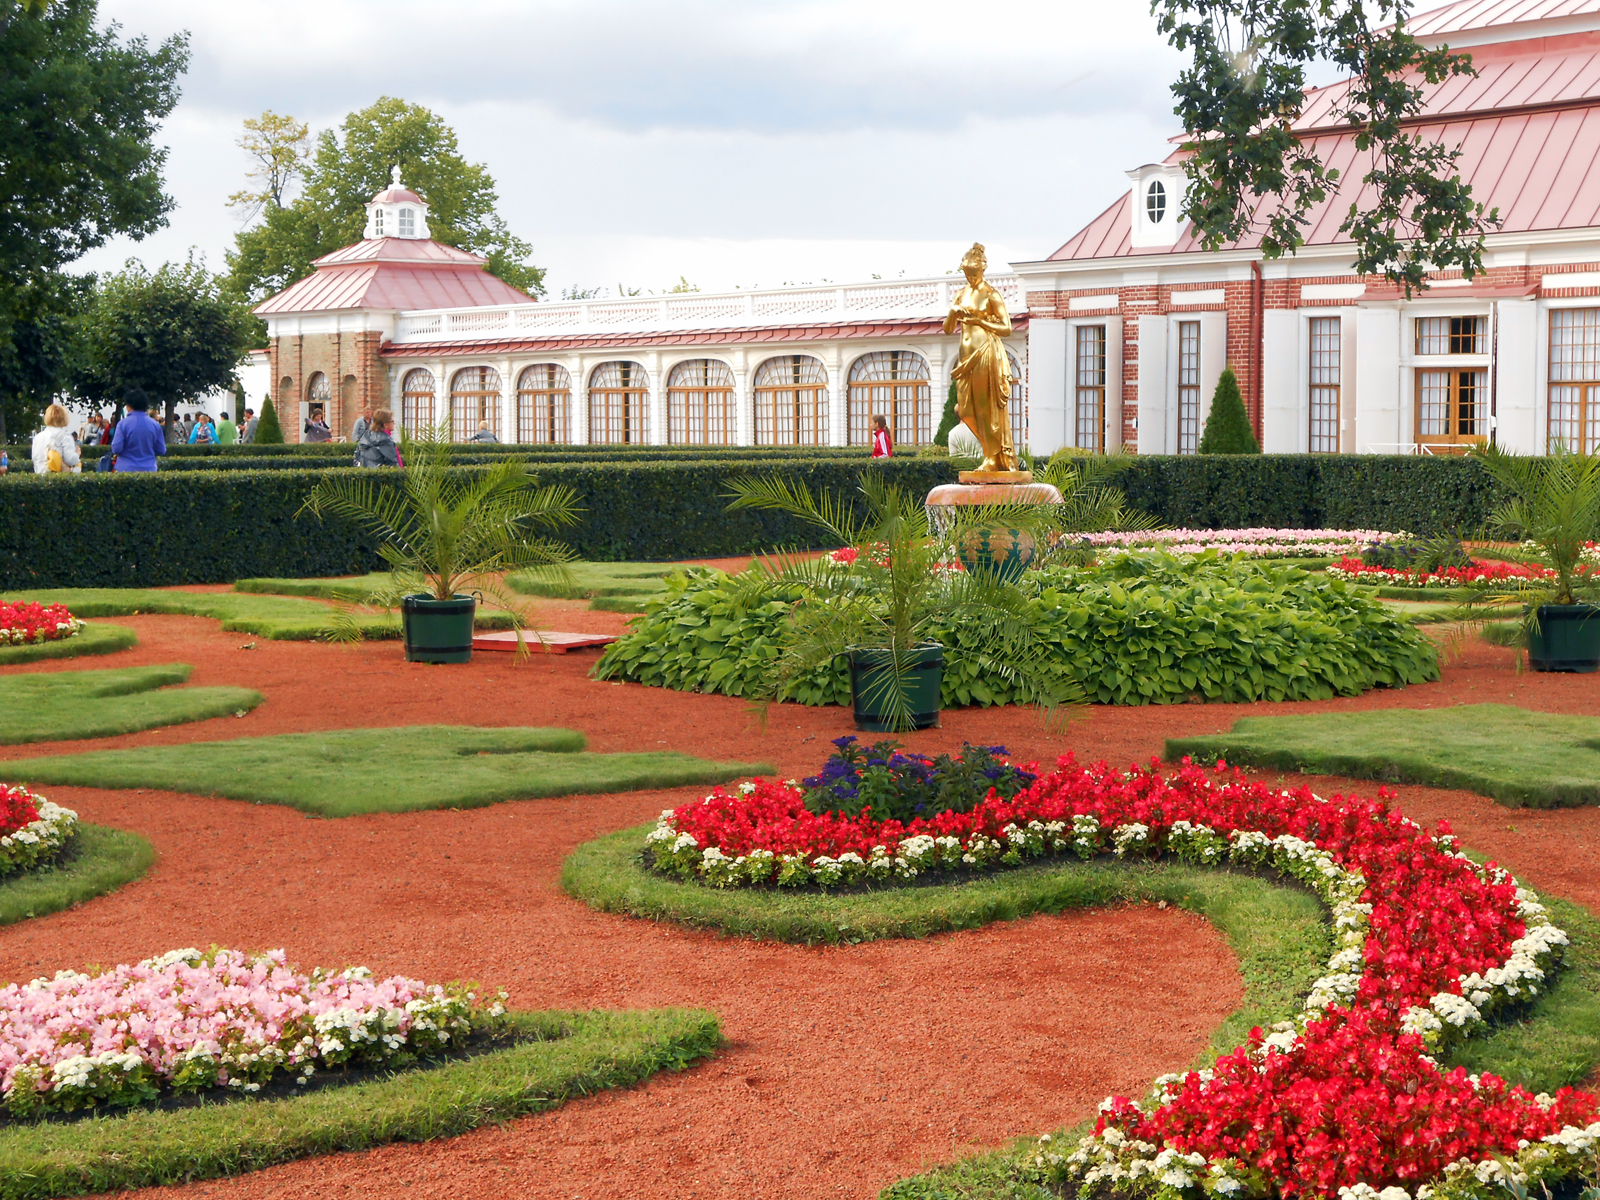 Lower gardens of the petergof photo